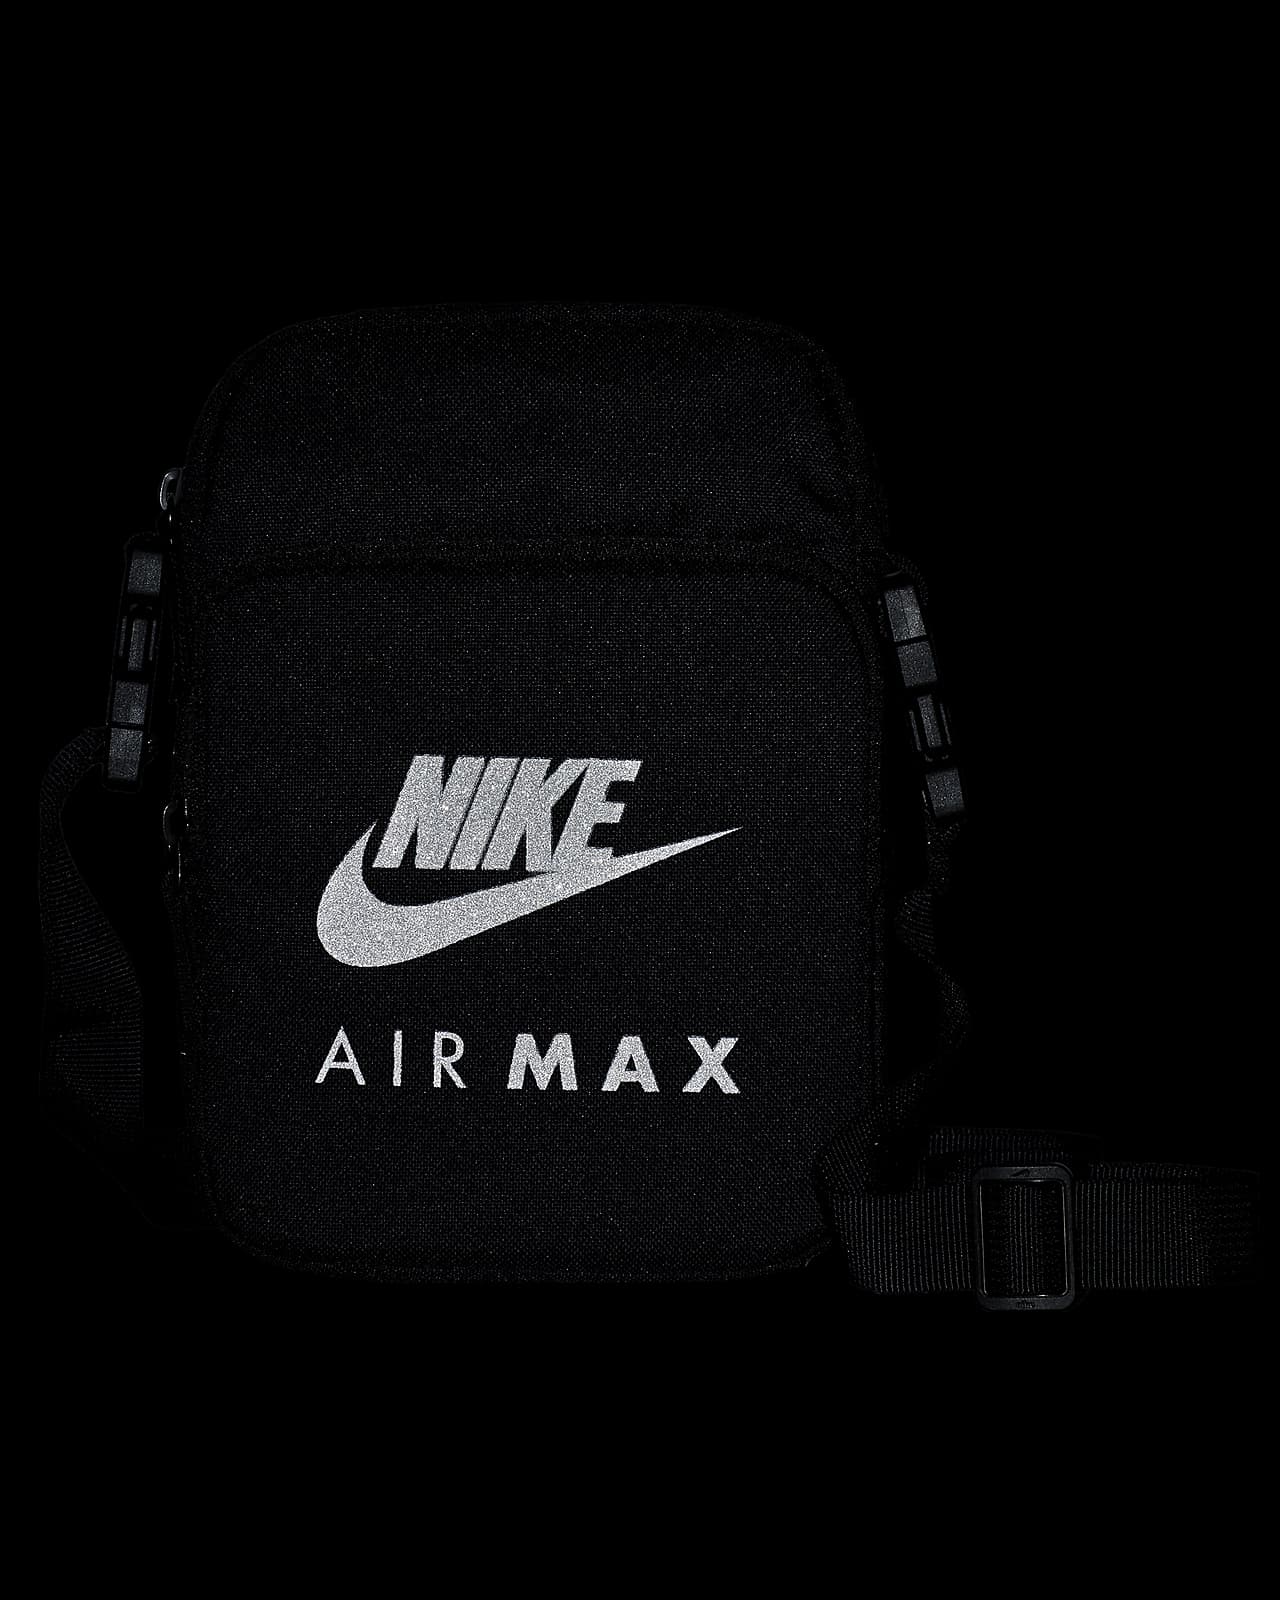 nike air max 2.0 crossbody bag